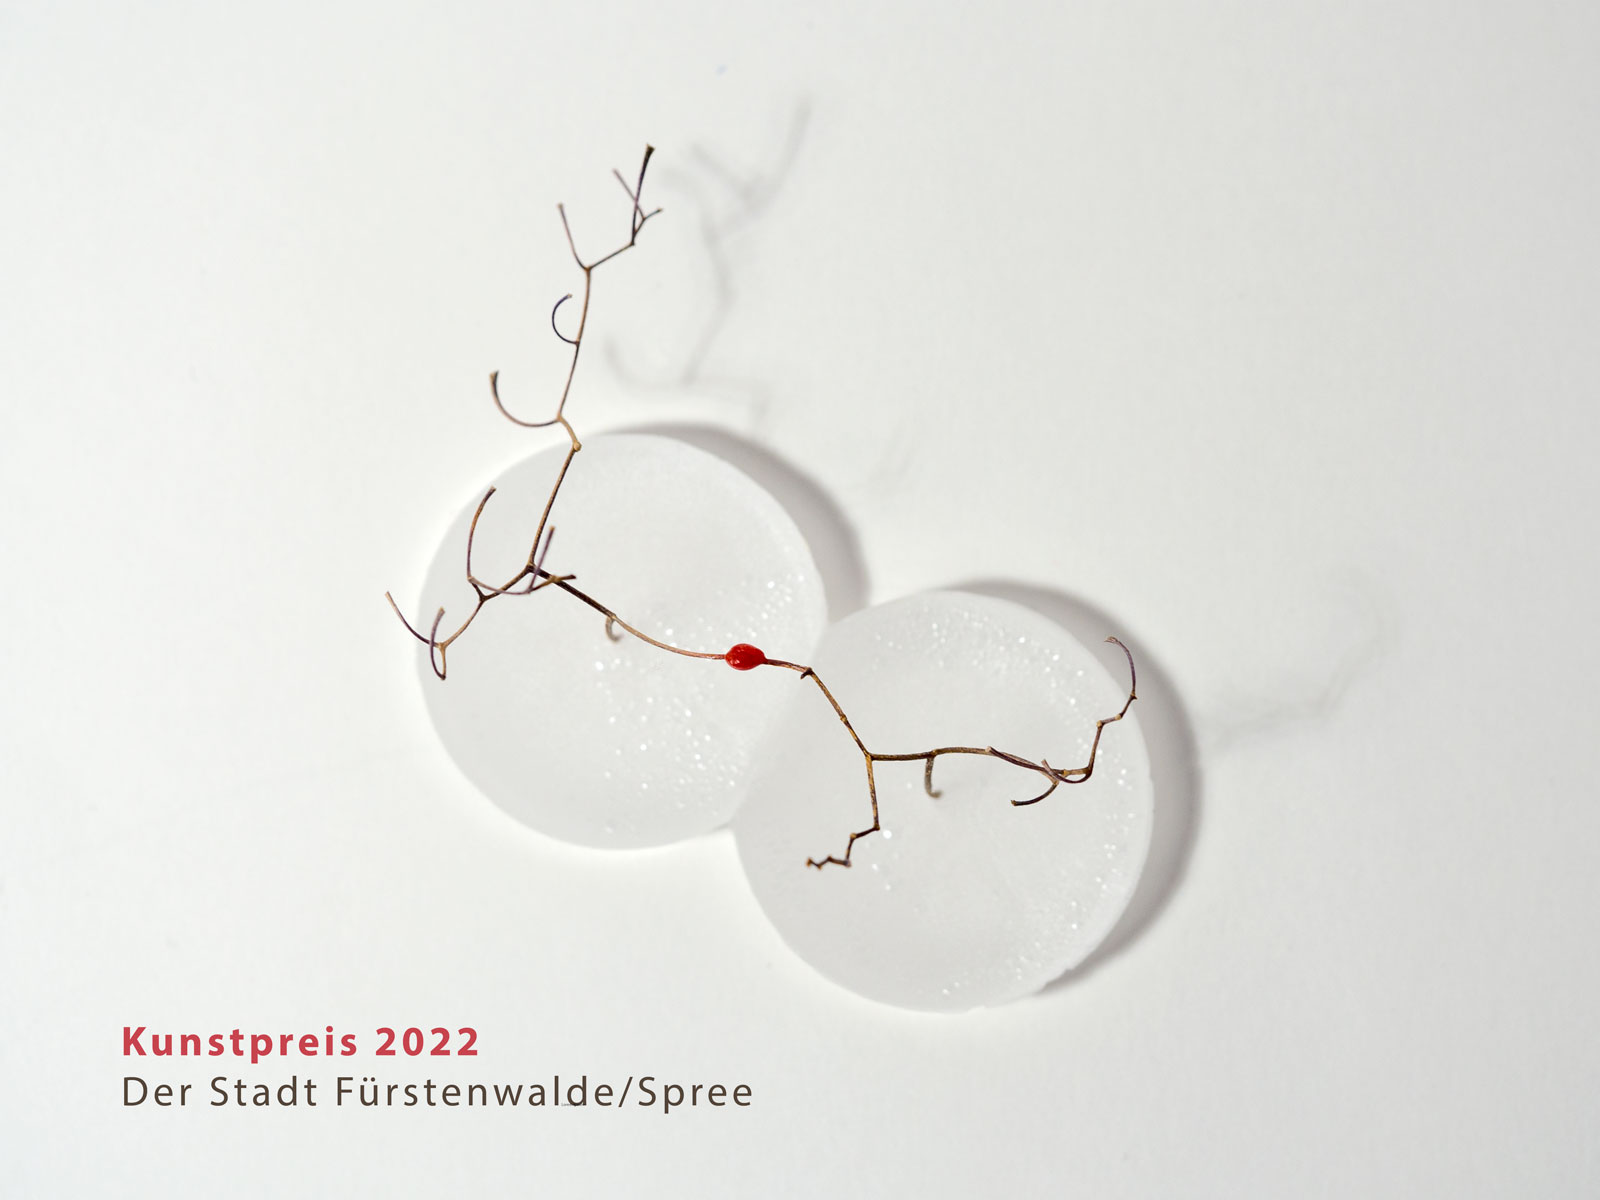 Anja Asche – experimentel artist / object, installation, drawing / based in Berlin / Germany. Kunstpreis der Stadt Fürstenwalde 2022